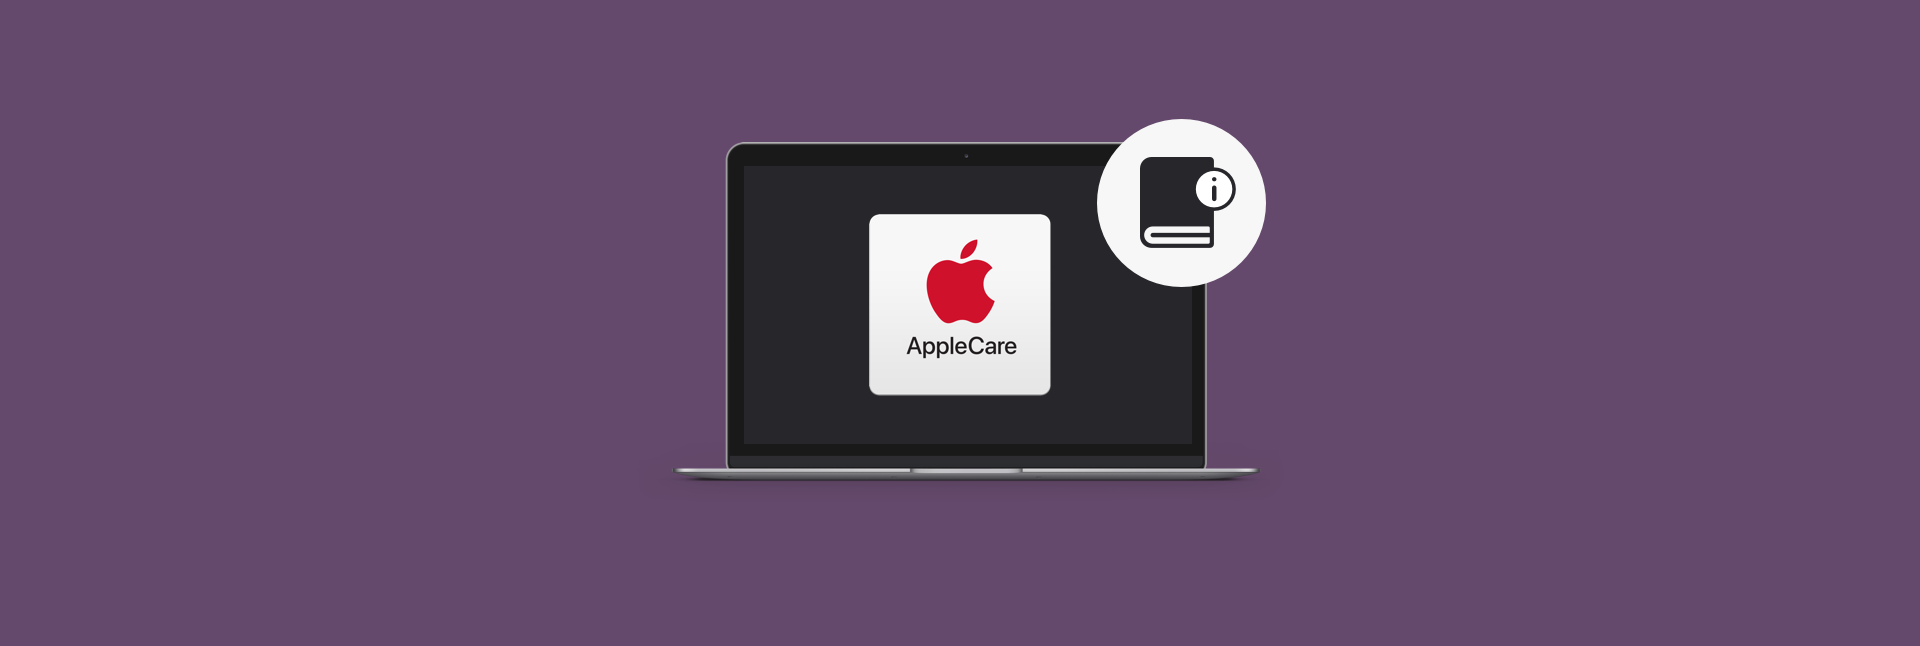 applecare for macbook pro 13